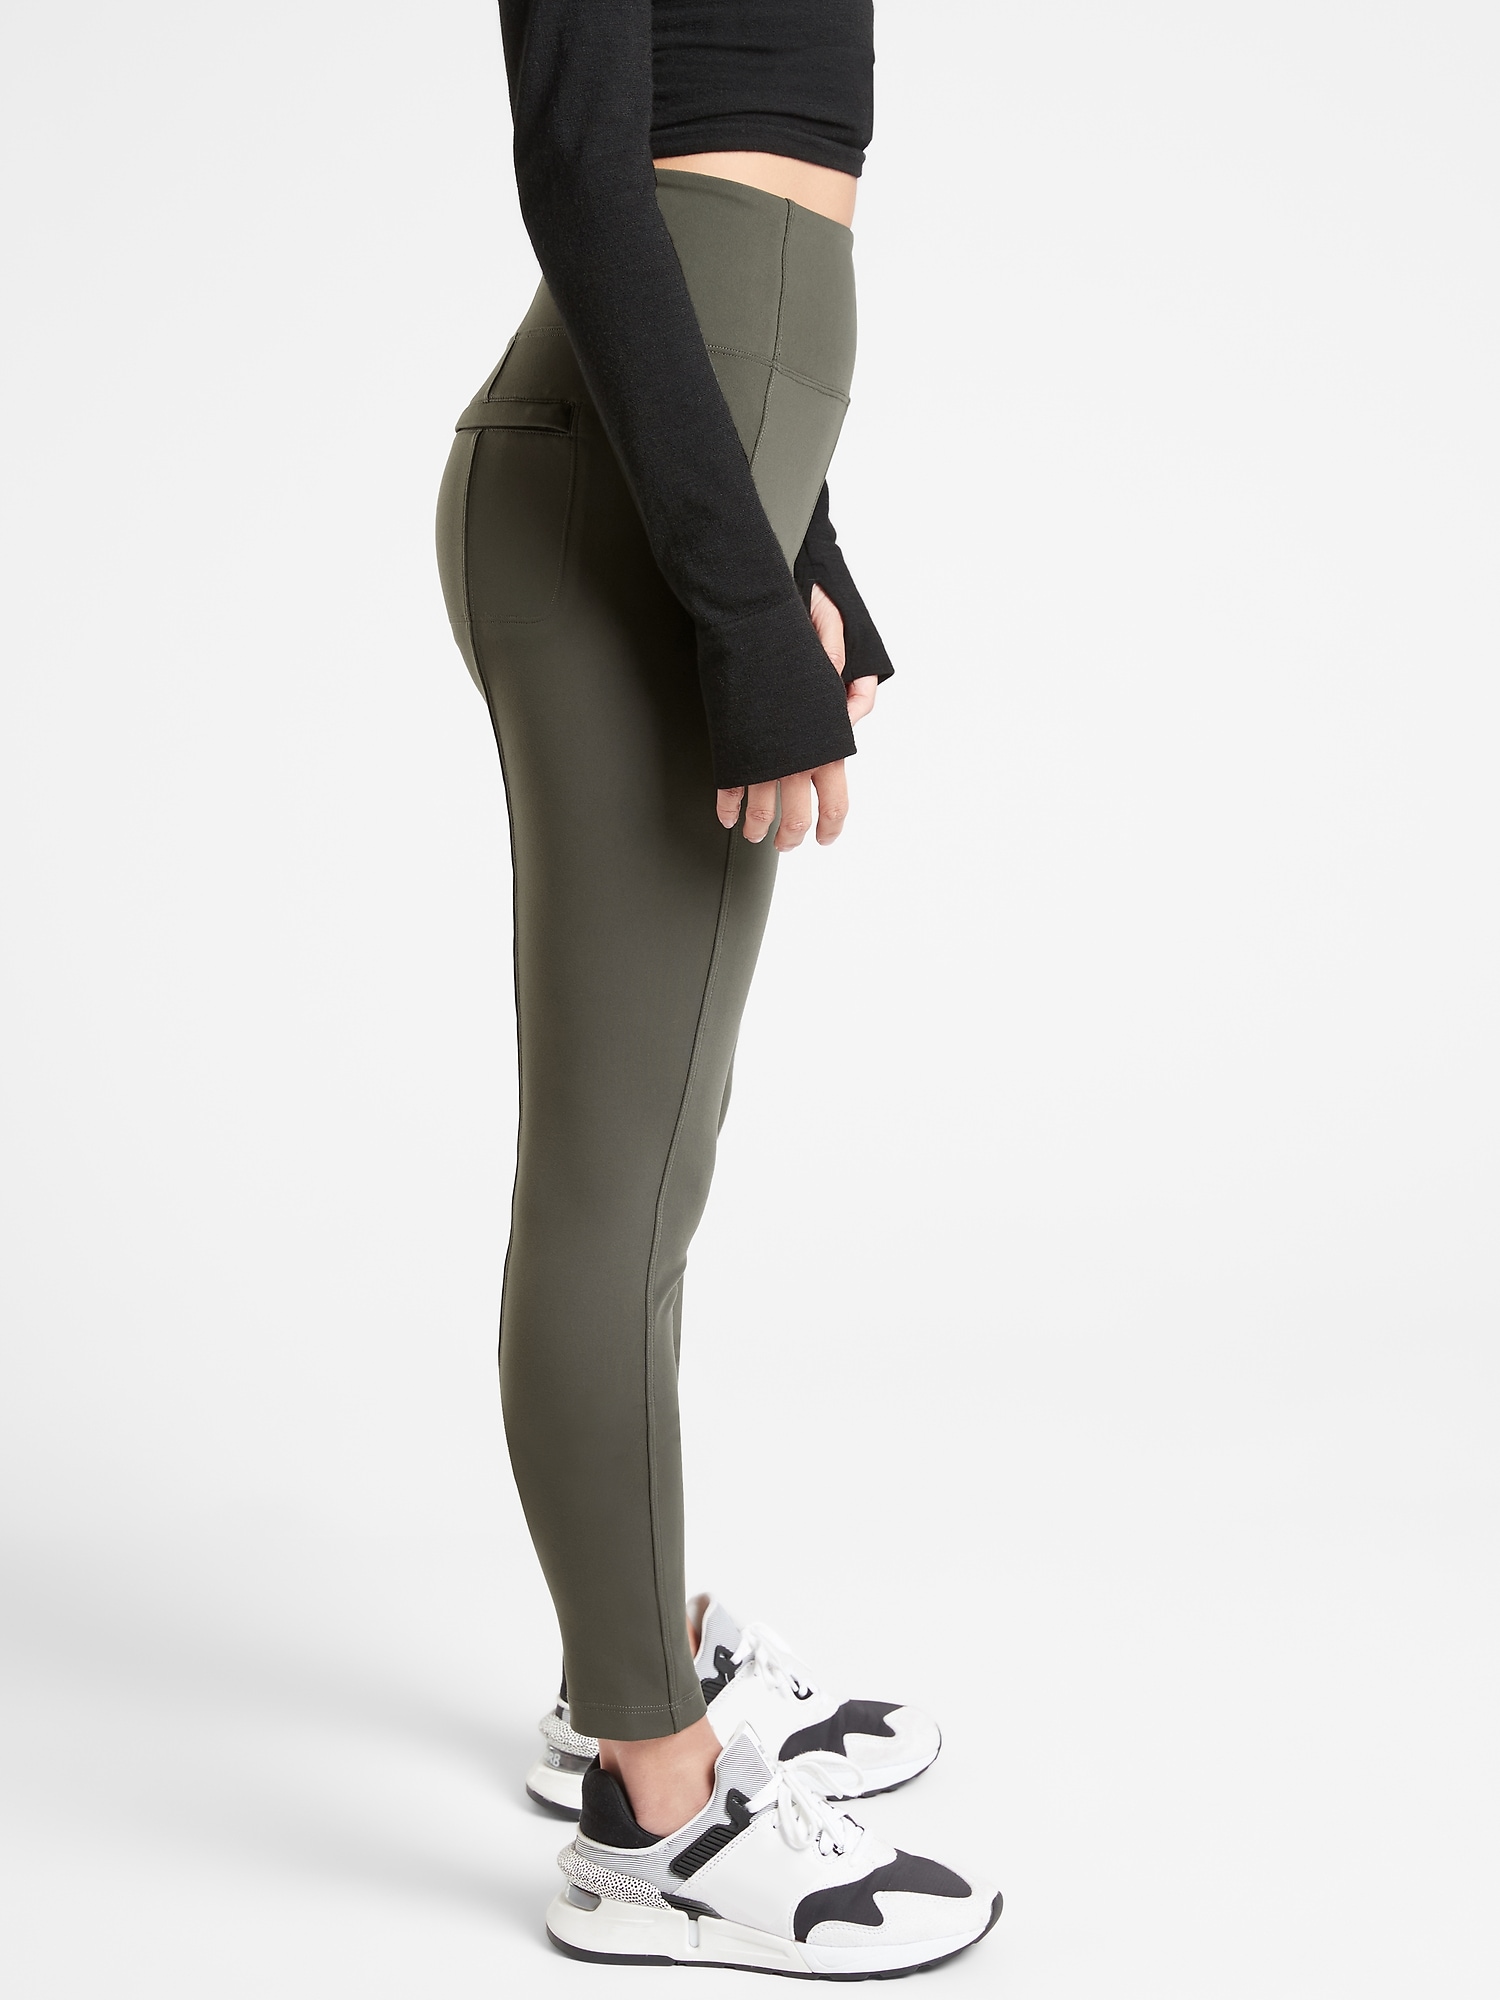 Athleta, Pants & Jumpsuits, Athleta Delancey Herringbone Leggings Tights  Gray Black Size S Xl Full Length